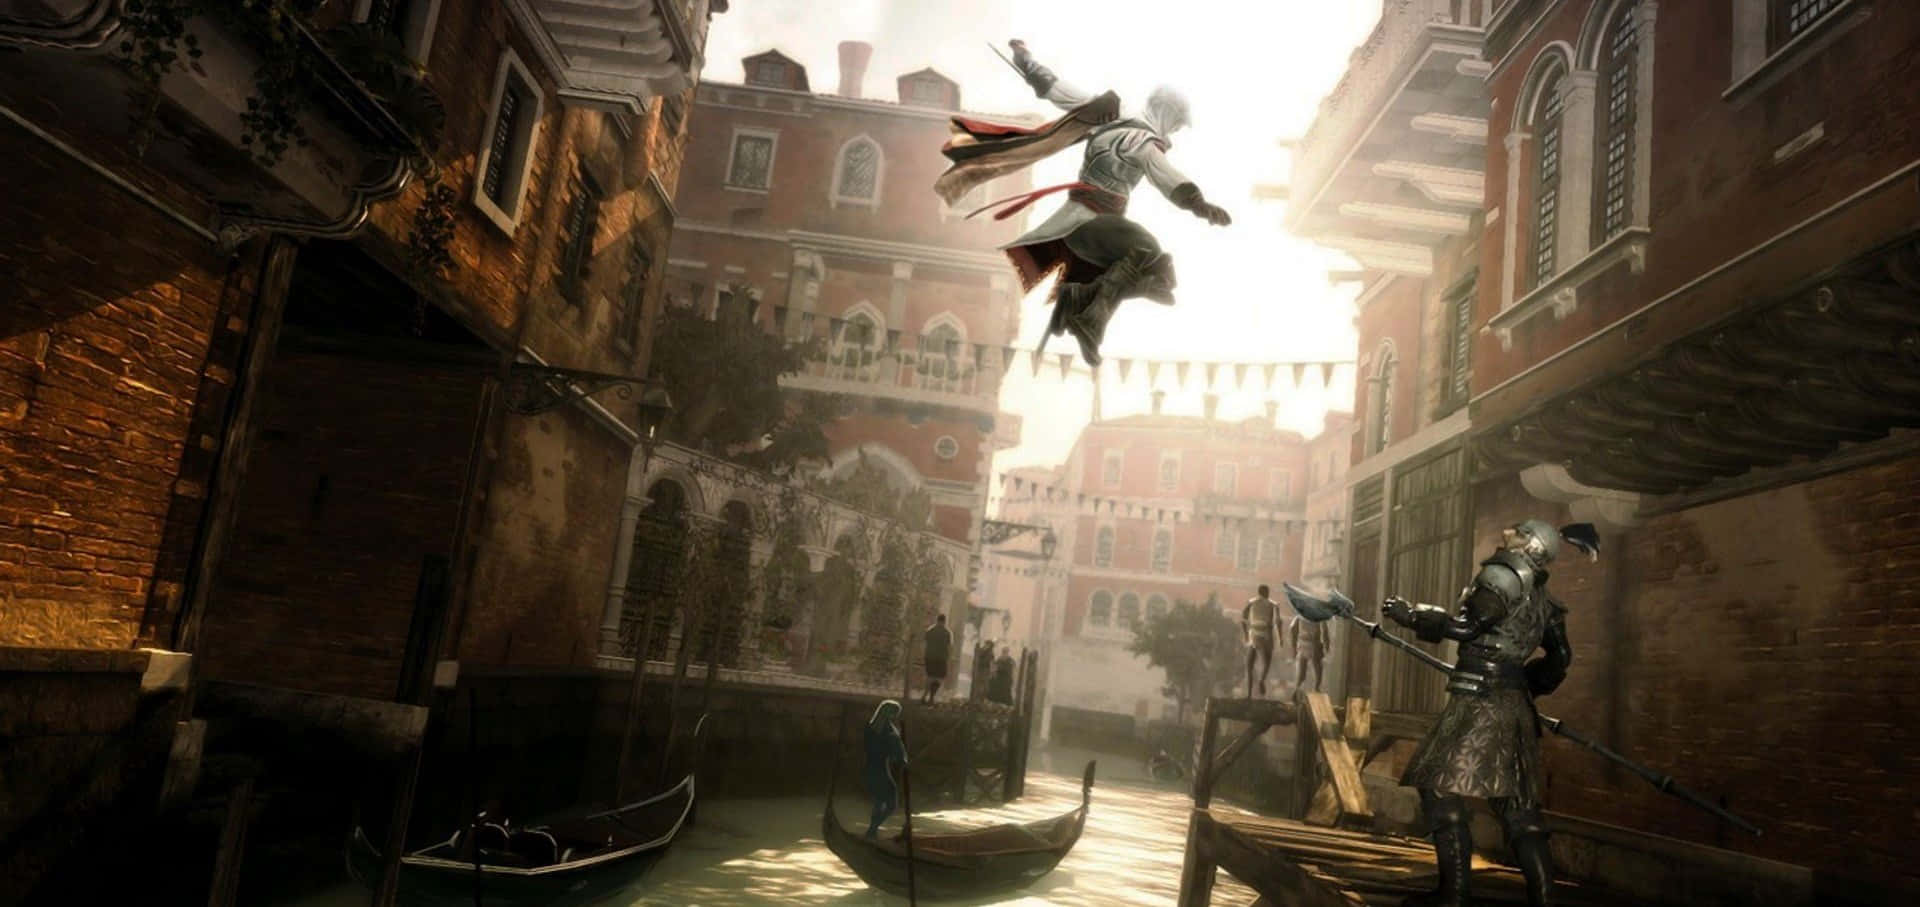 The Legendary Assassin, Ezio Auditore in action Wallpaper